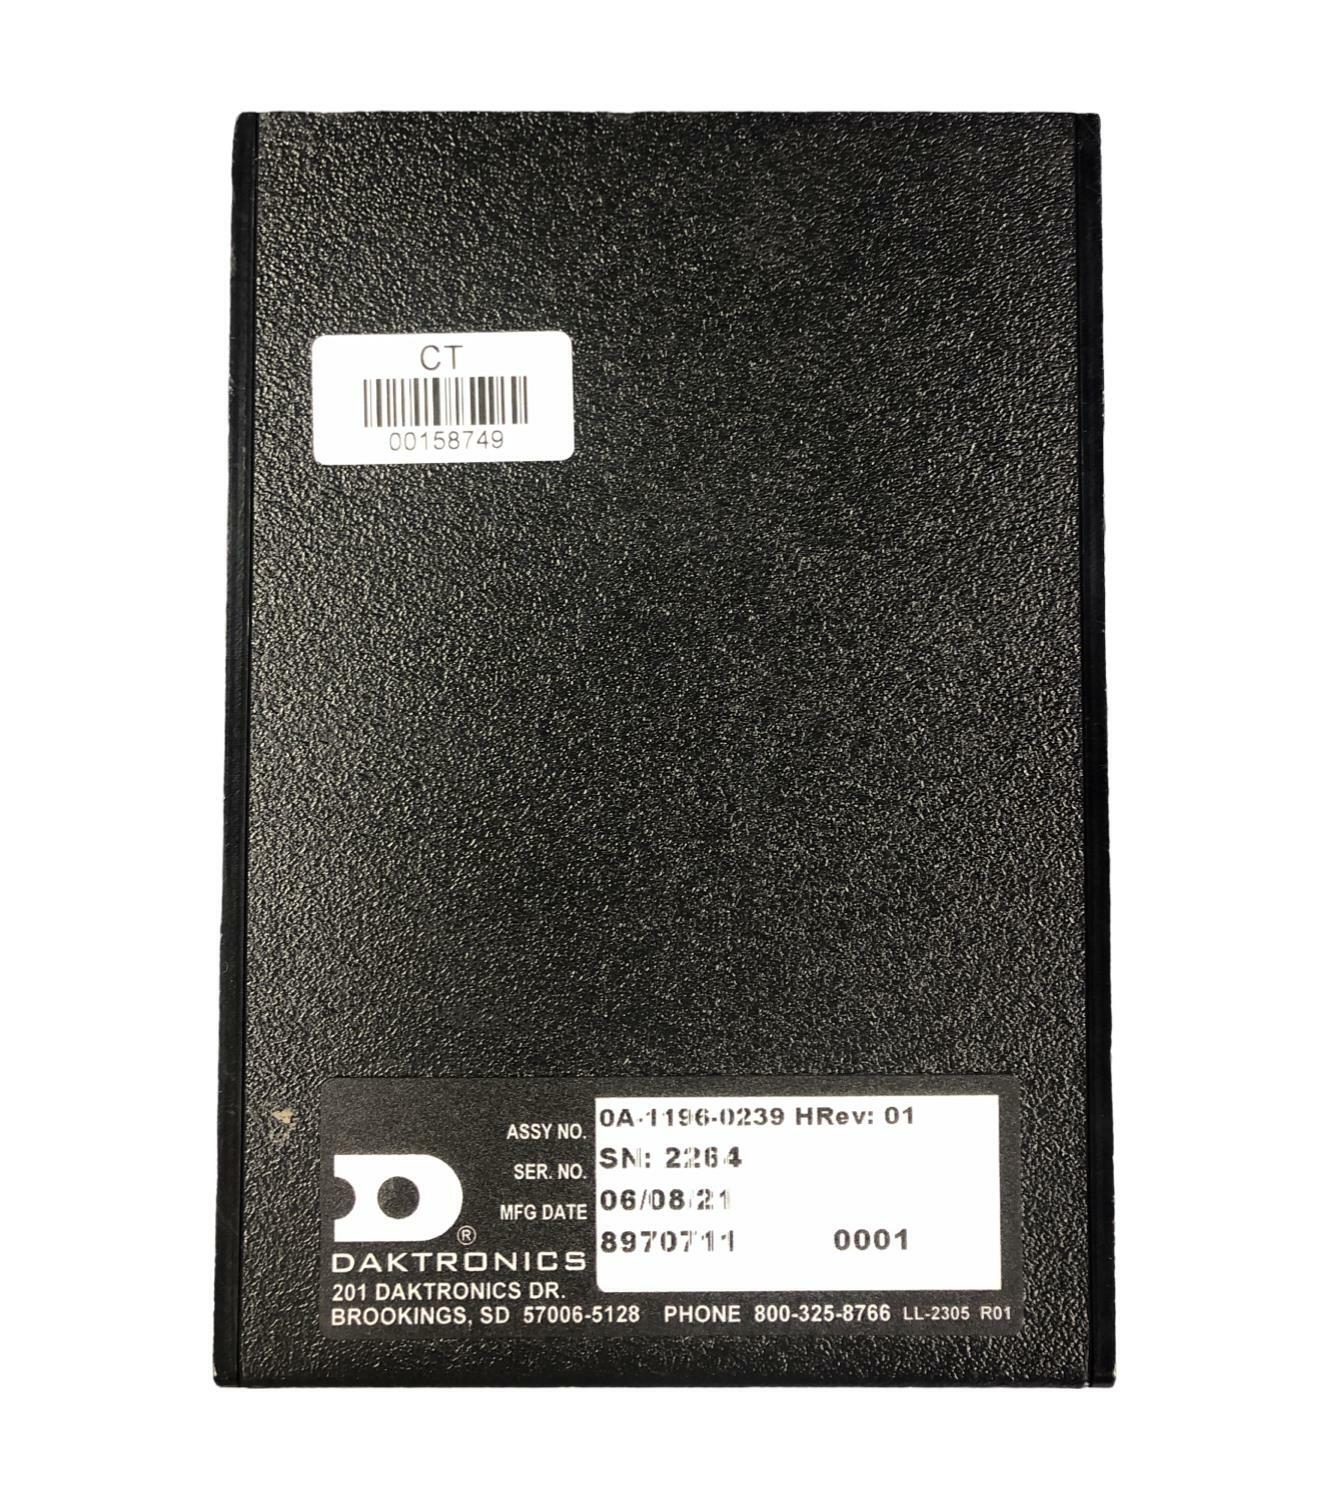 Daktronics DM-100 Digital POS Controller 0A-1196-0239